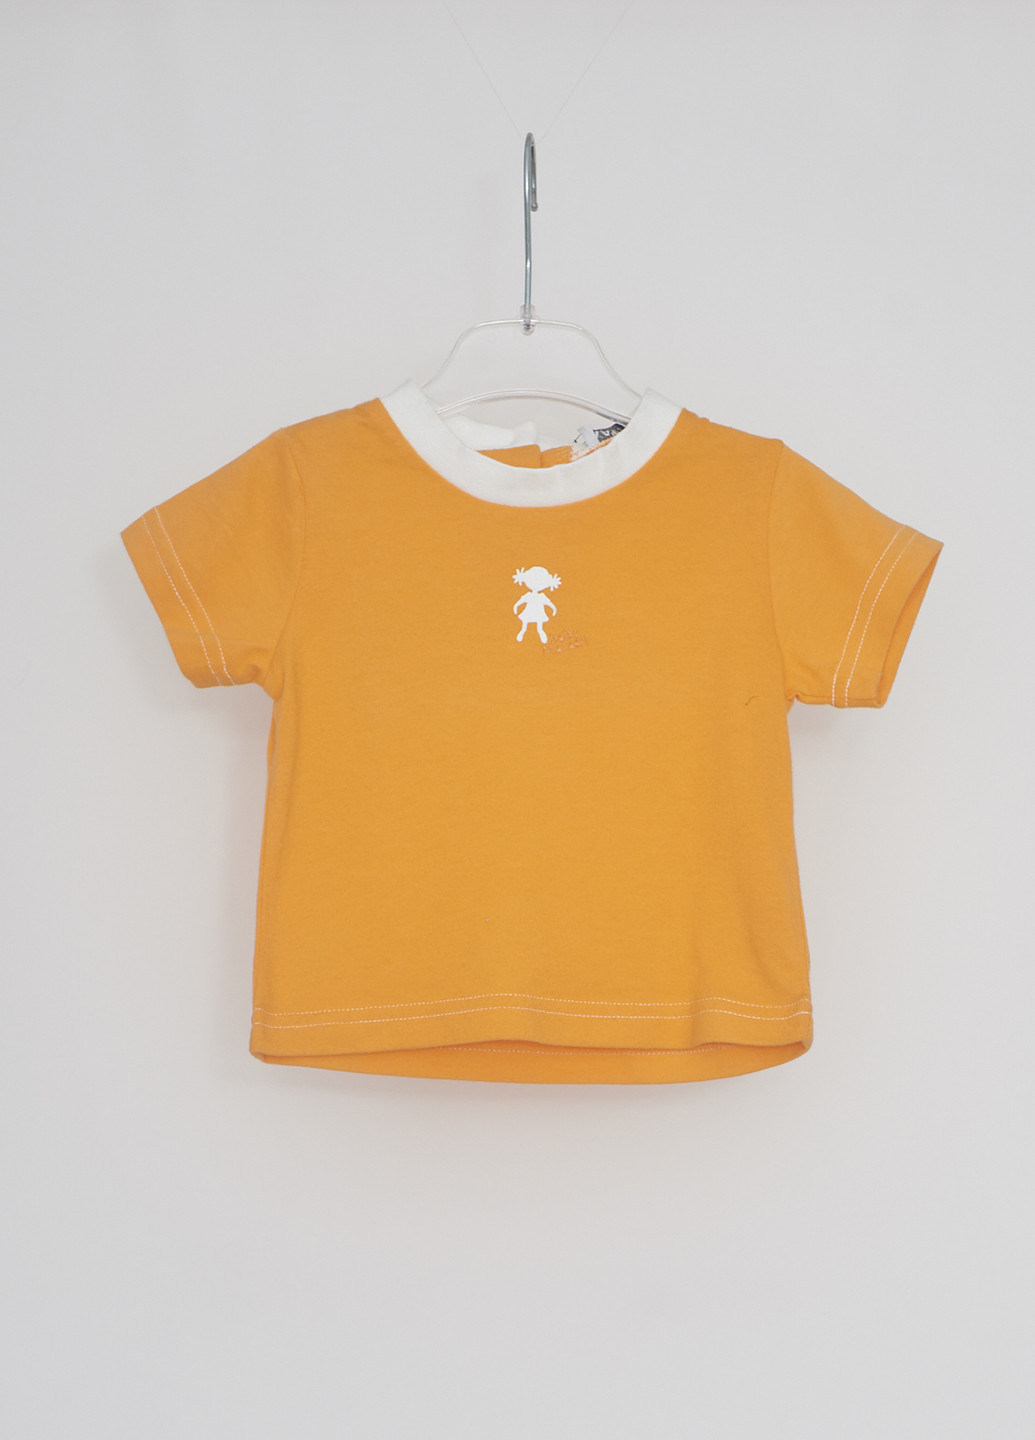 Оранжевая летняя футболка с коротким рукавом Marasil